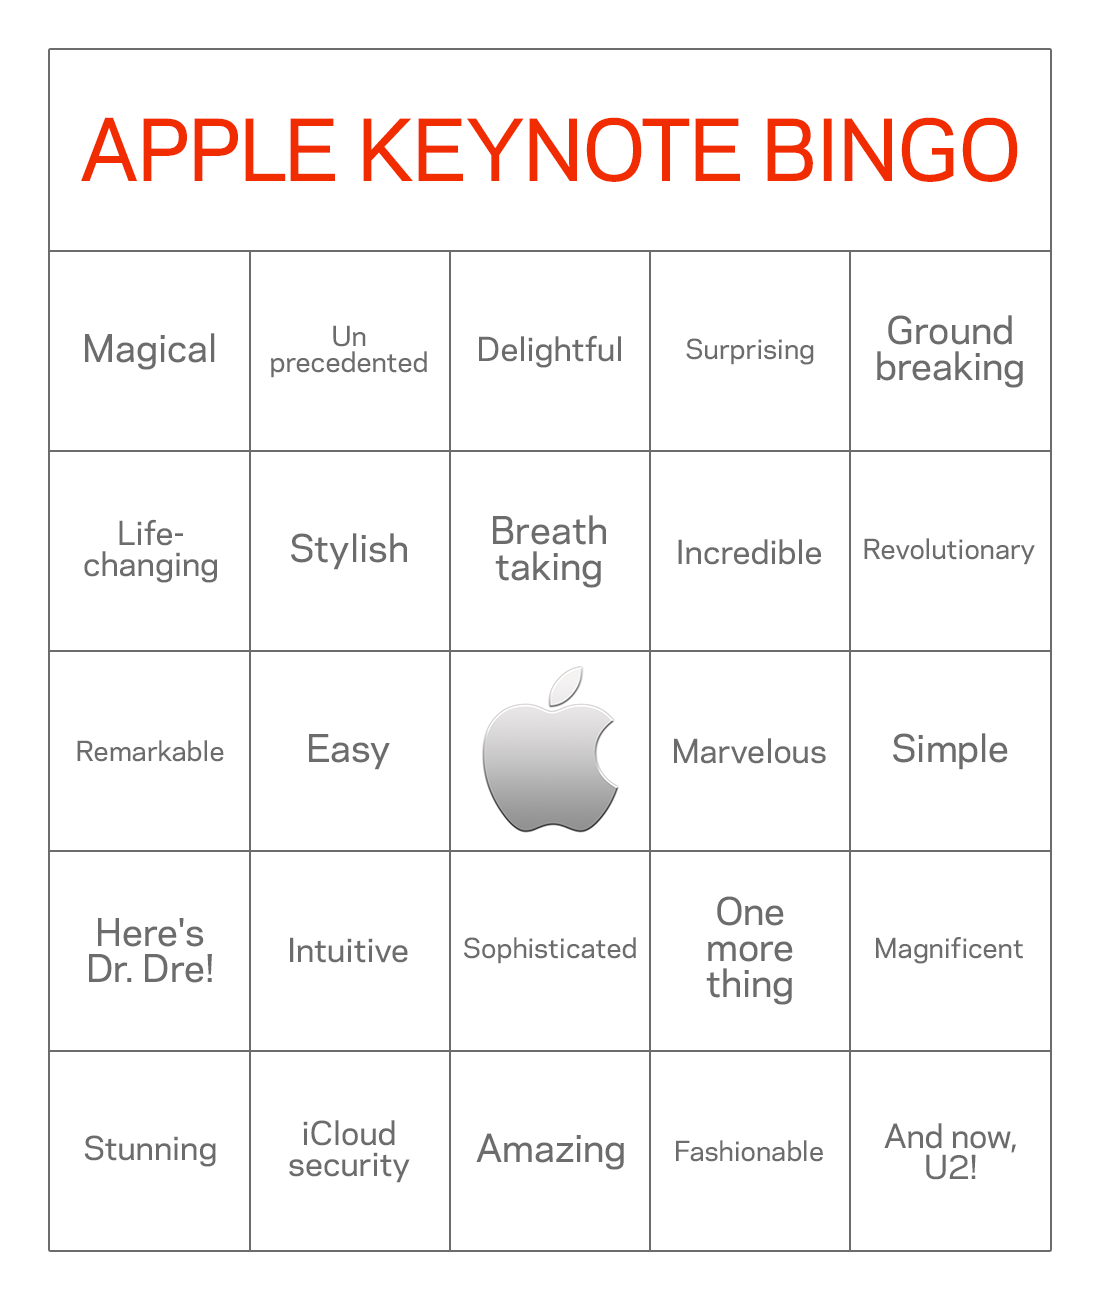 Pala Bingo USA for apple instal